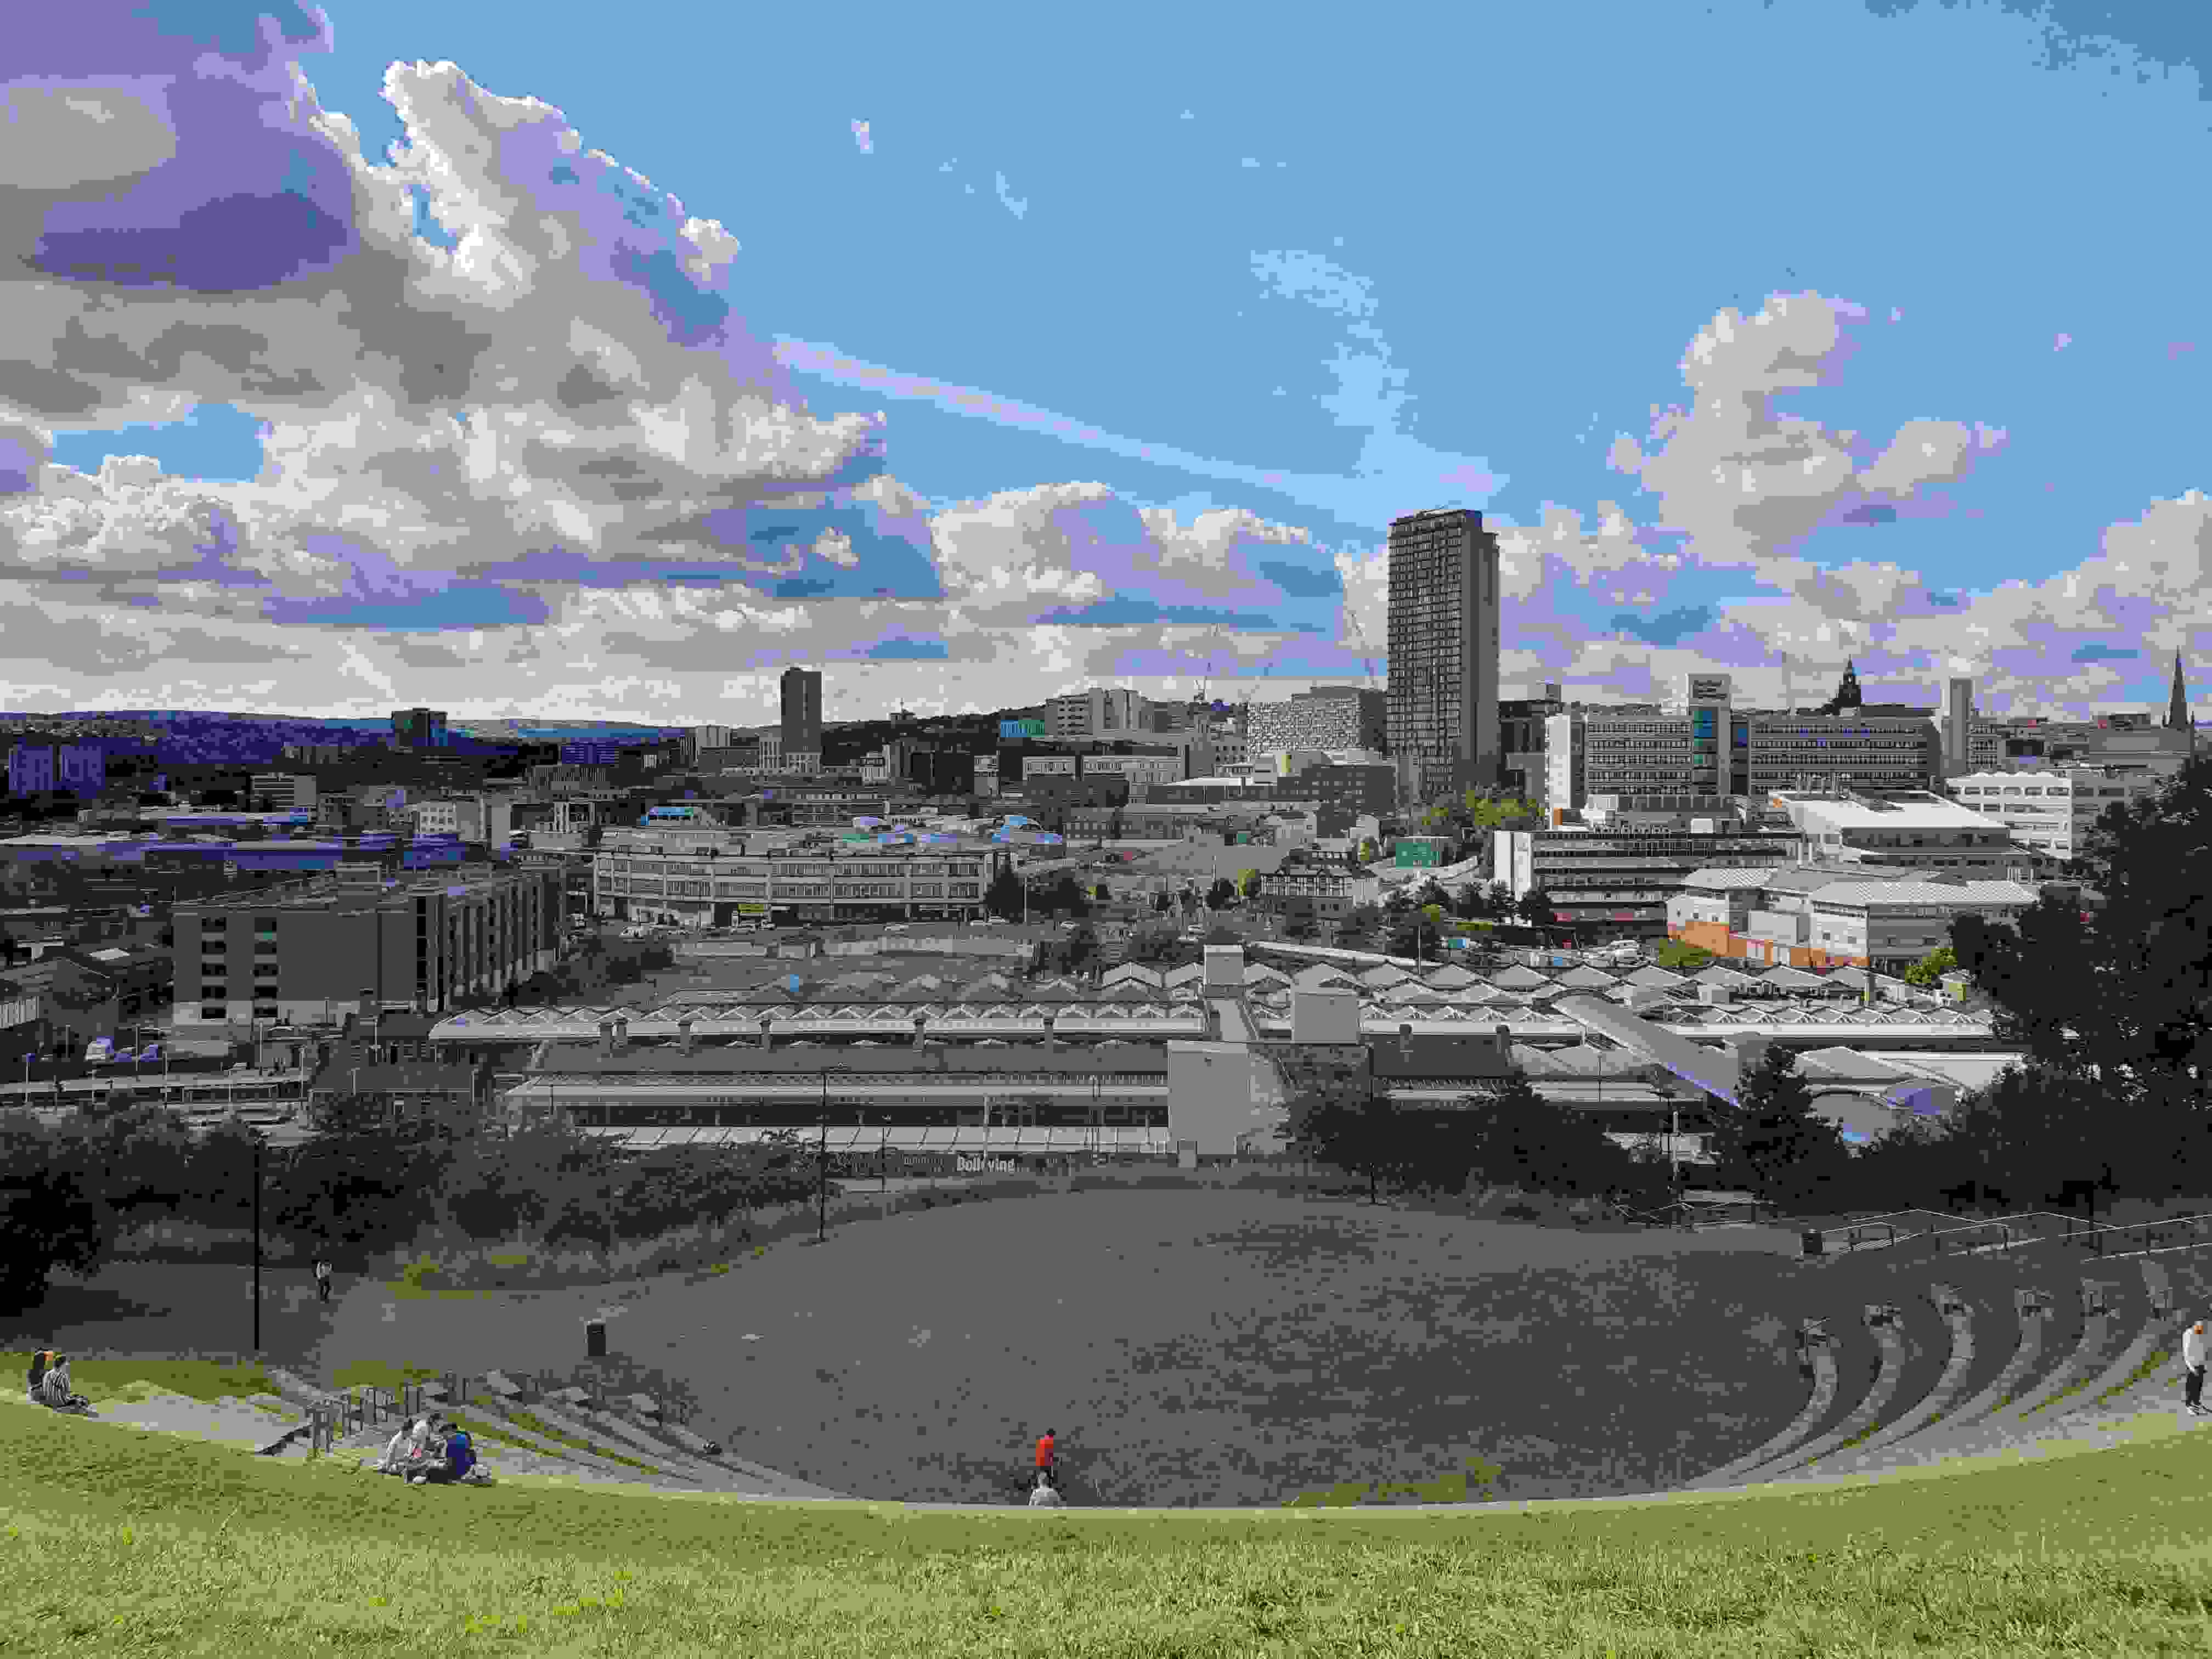 A skyline view of Sheffield City Centre